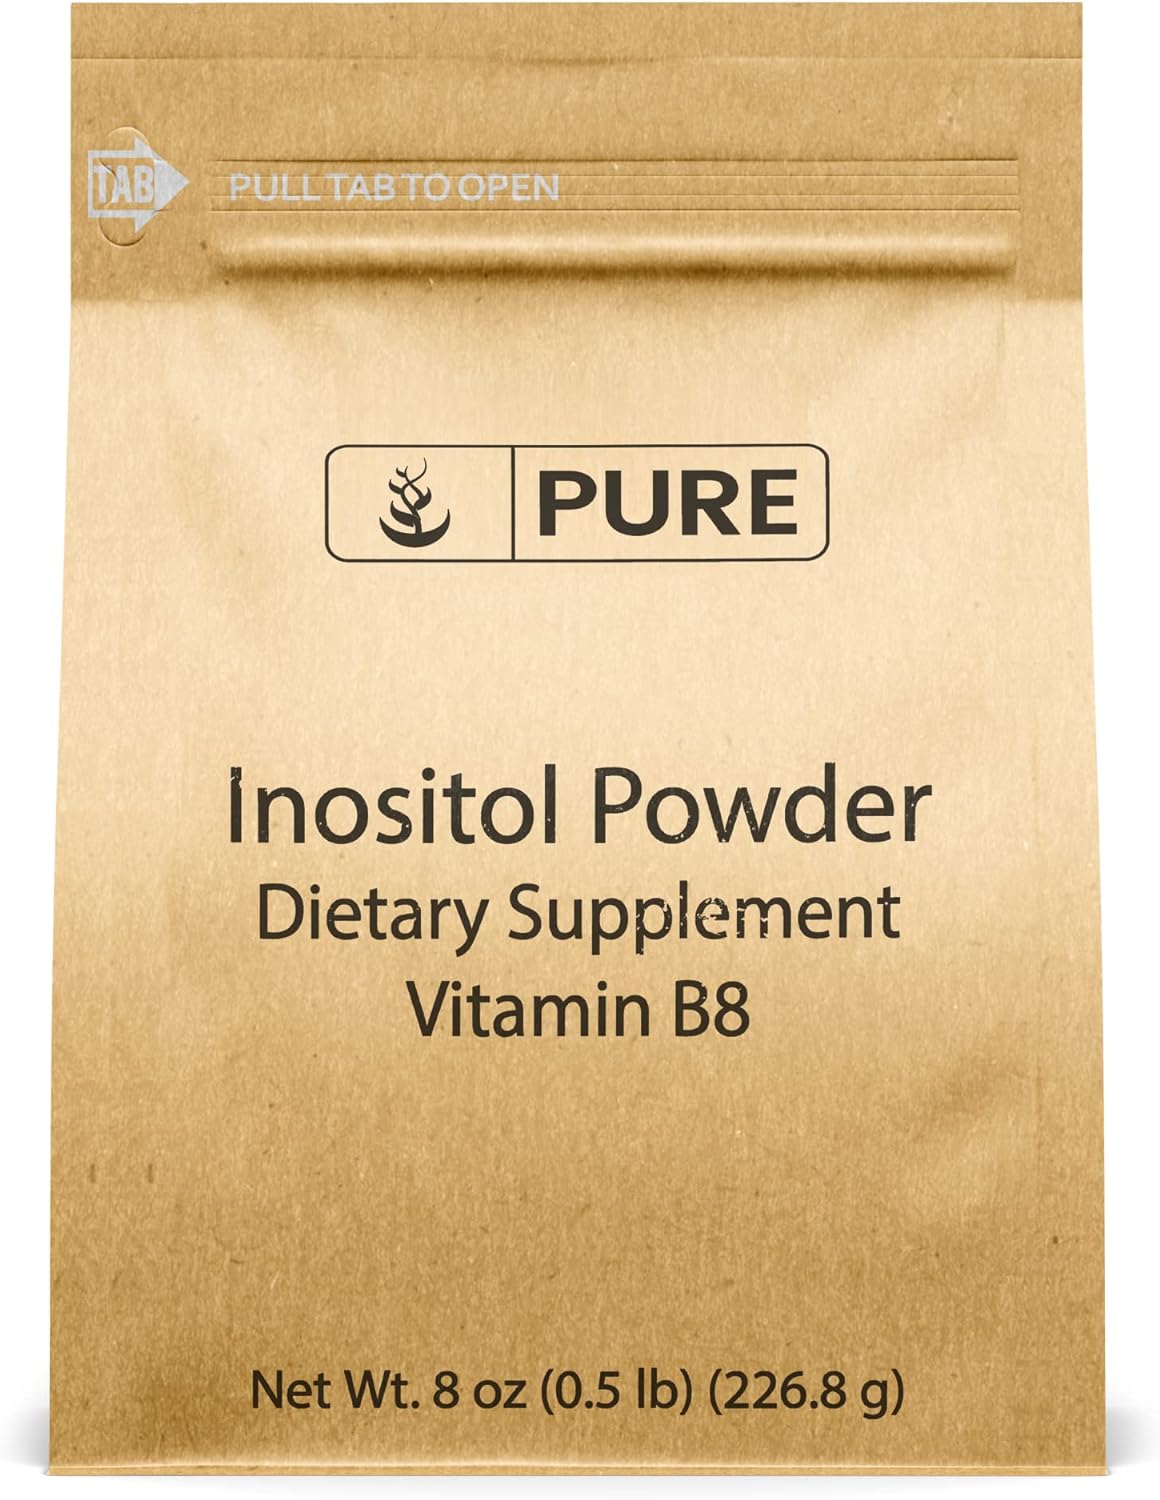 Pure Original Ingredients Inositol (Vitamin B8) Powder (8 oz) Always Pure, No Fillers or Additives, Lab Verified